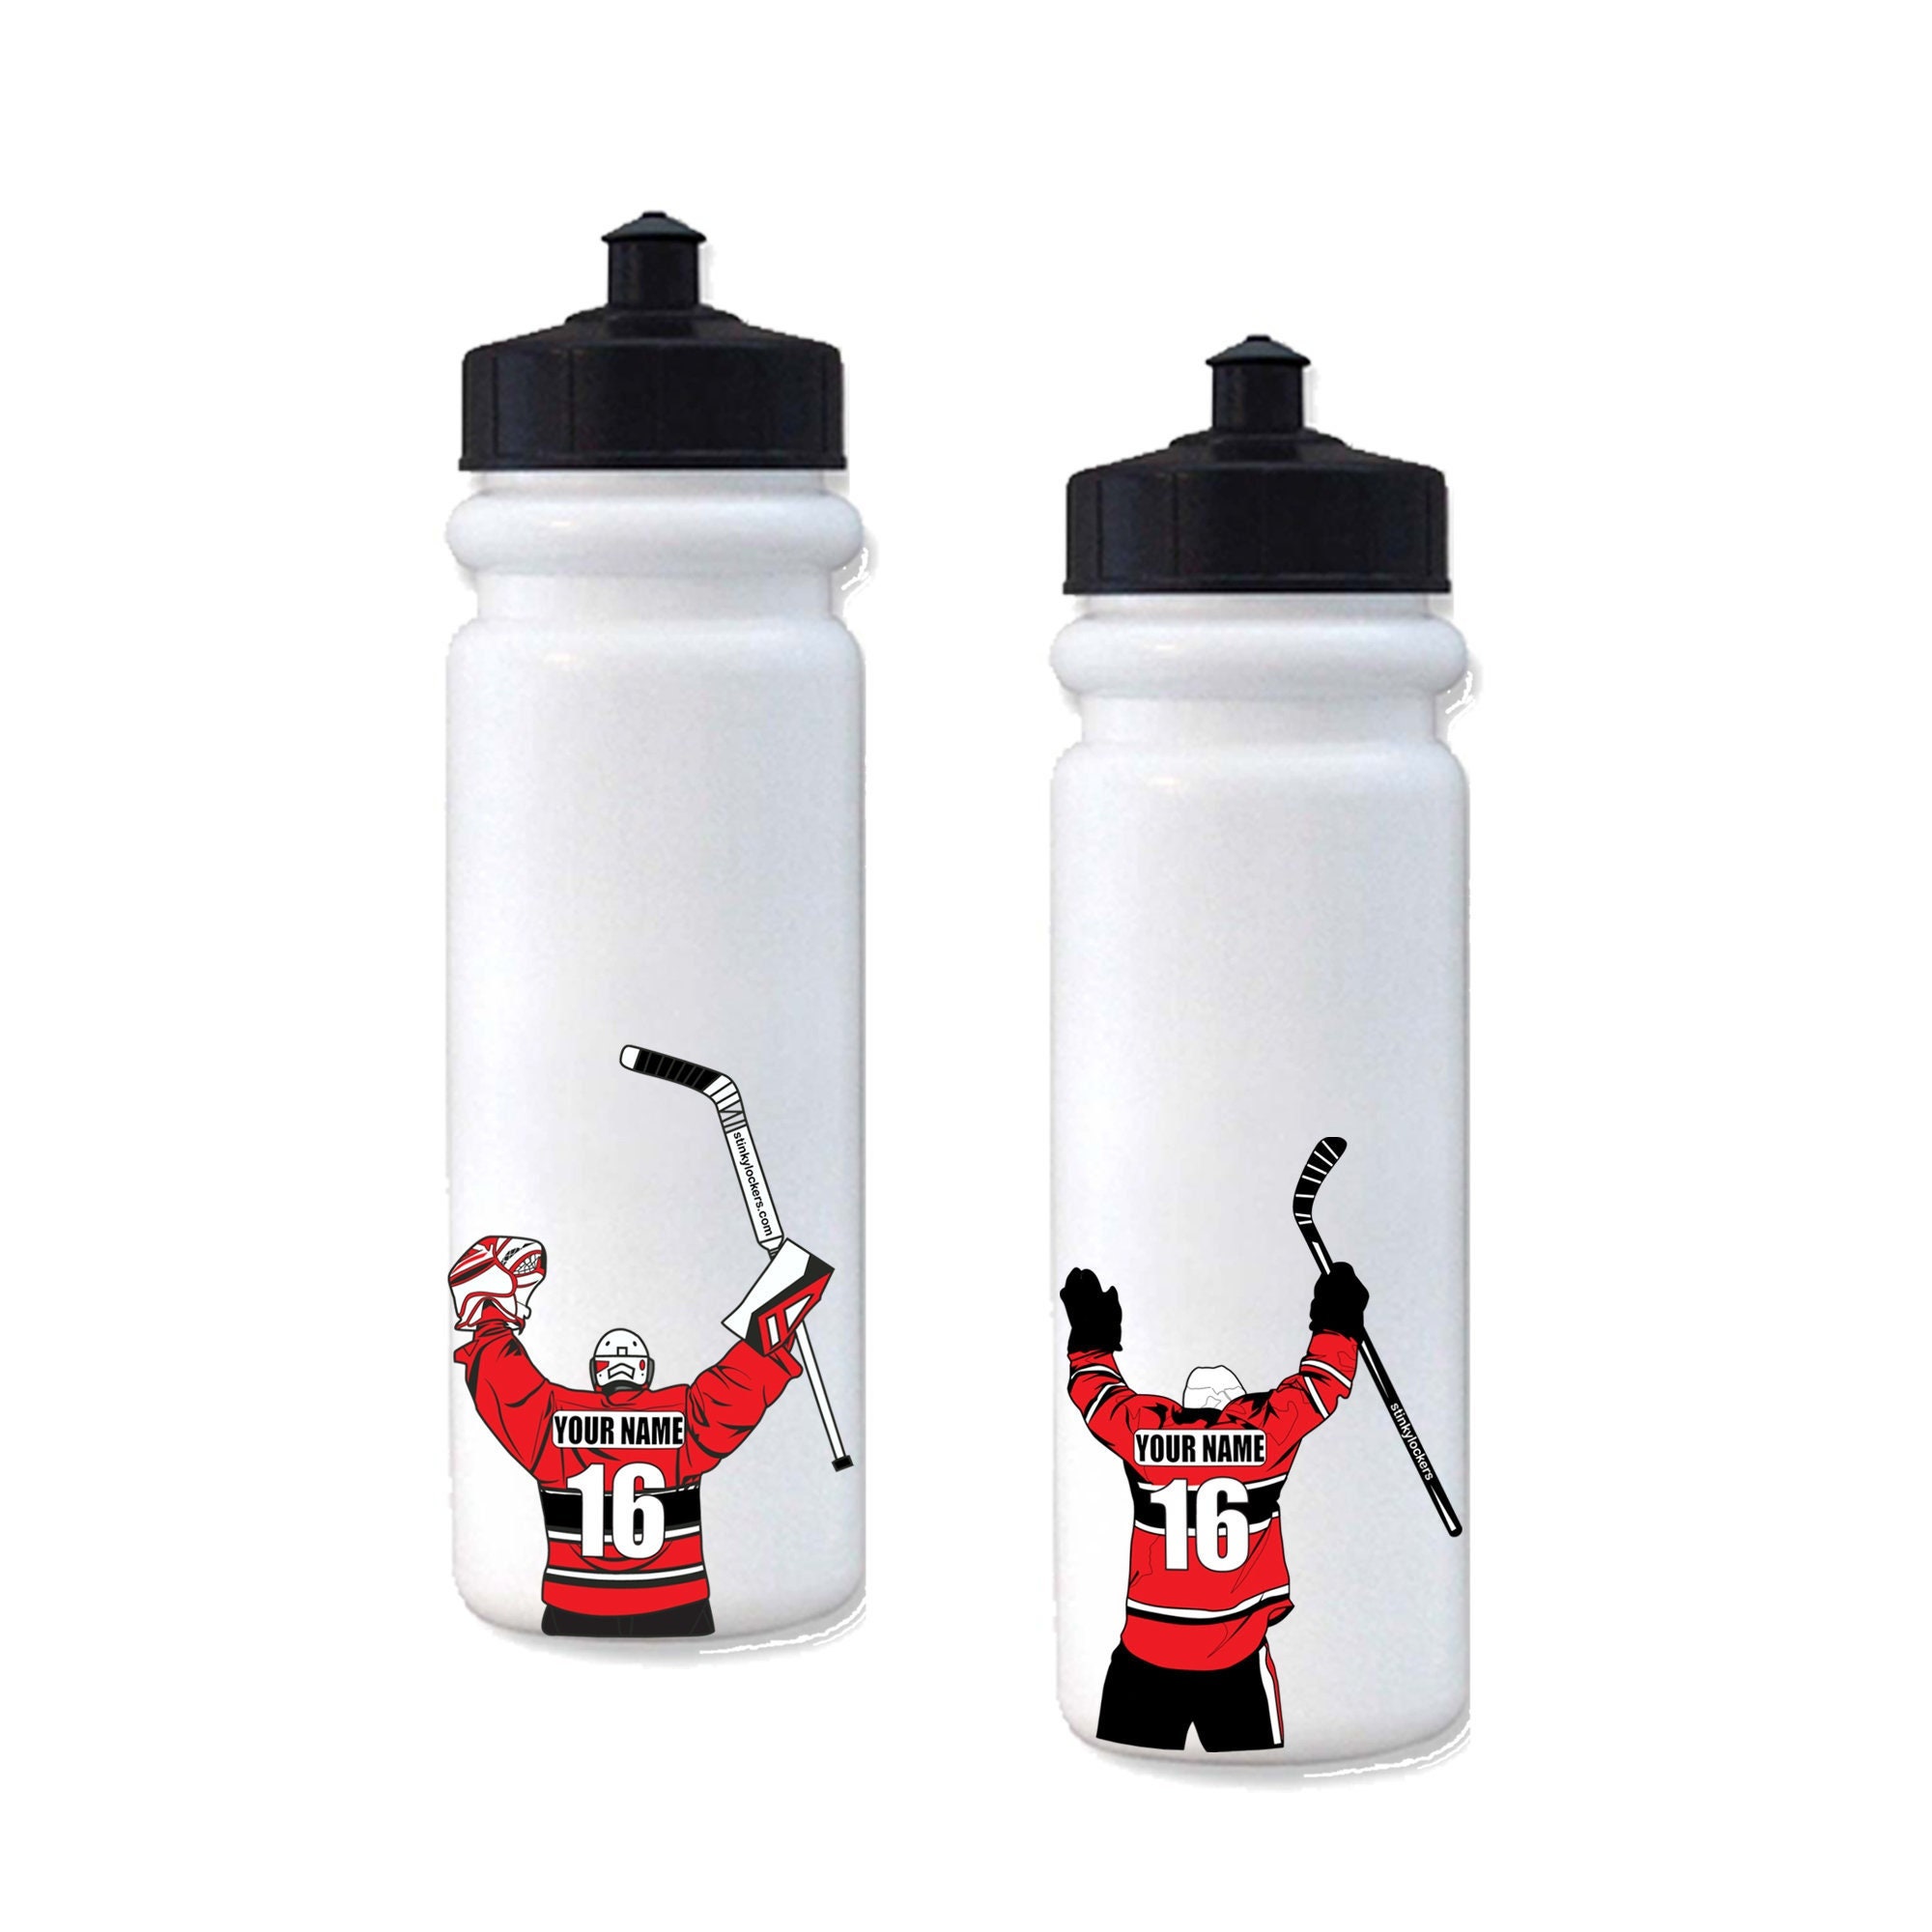 Personalized Hockey Water Bottle Stickers 